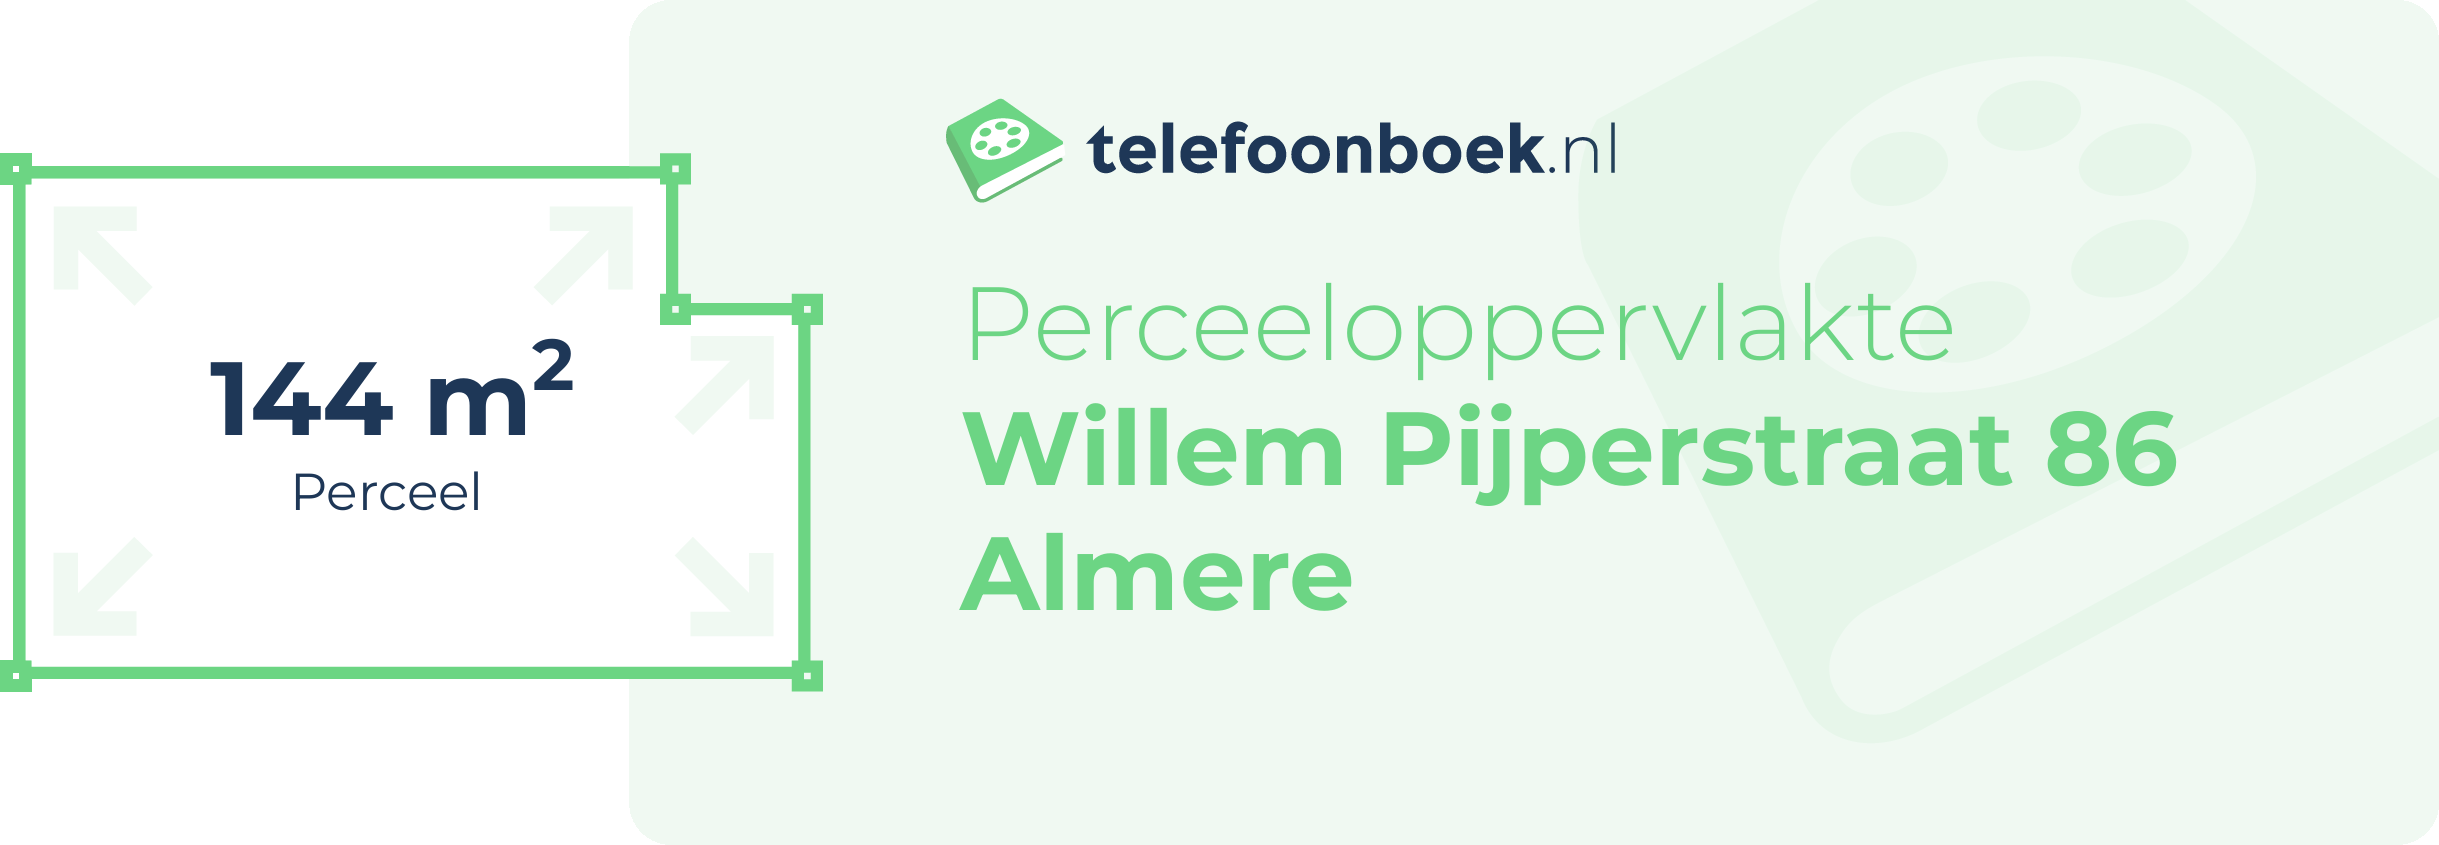 Perceeloppervlakte Willem Pijperstraat 86 Almere